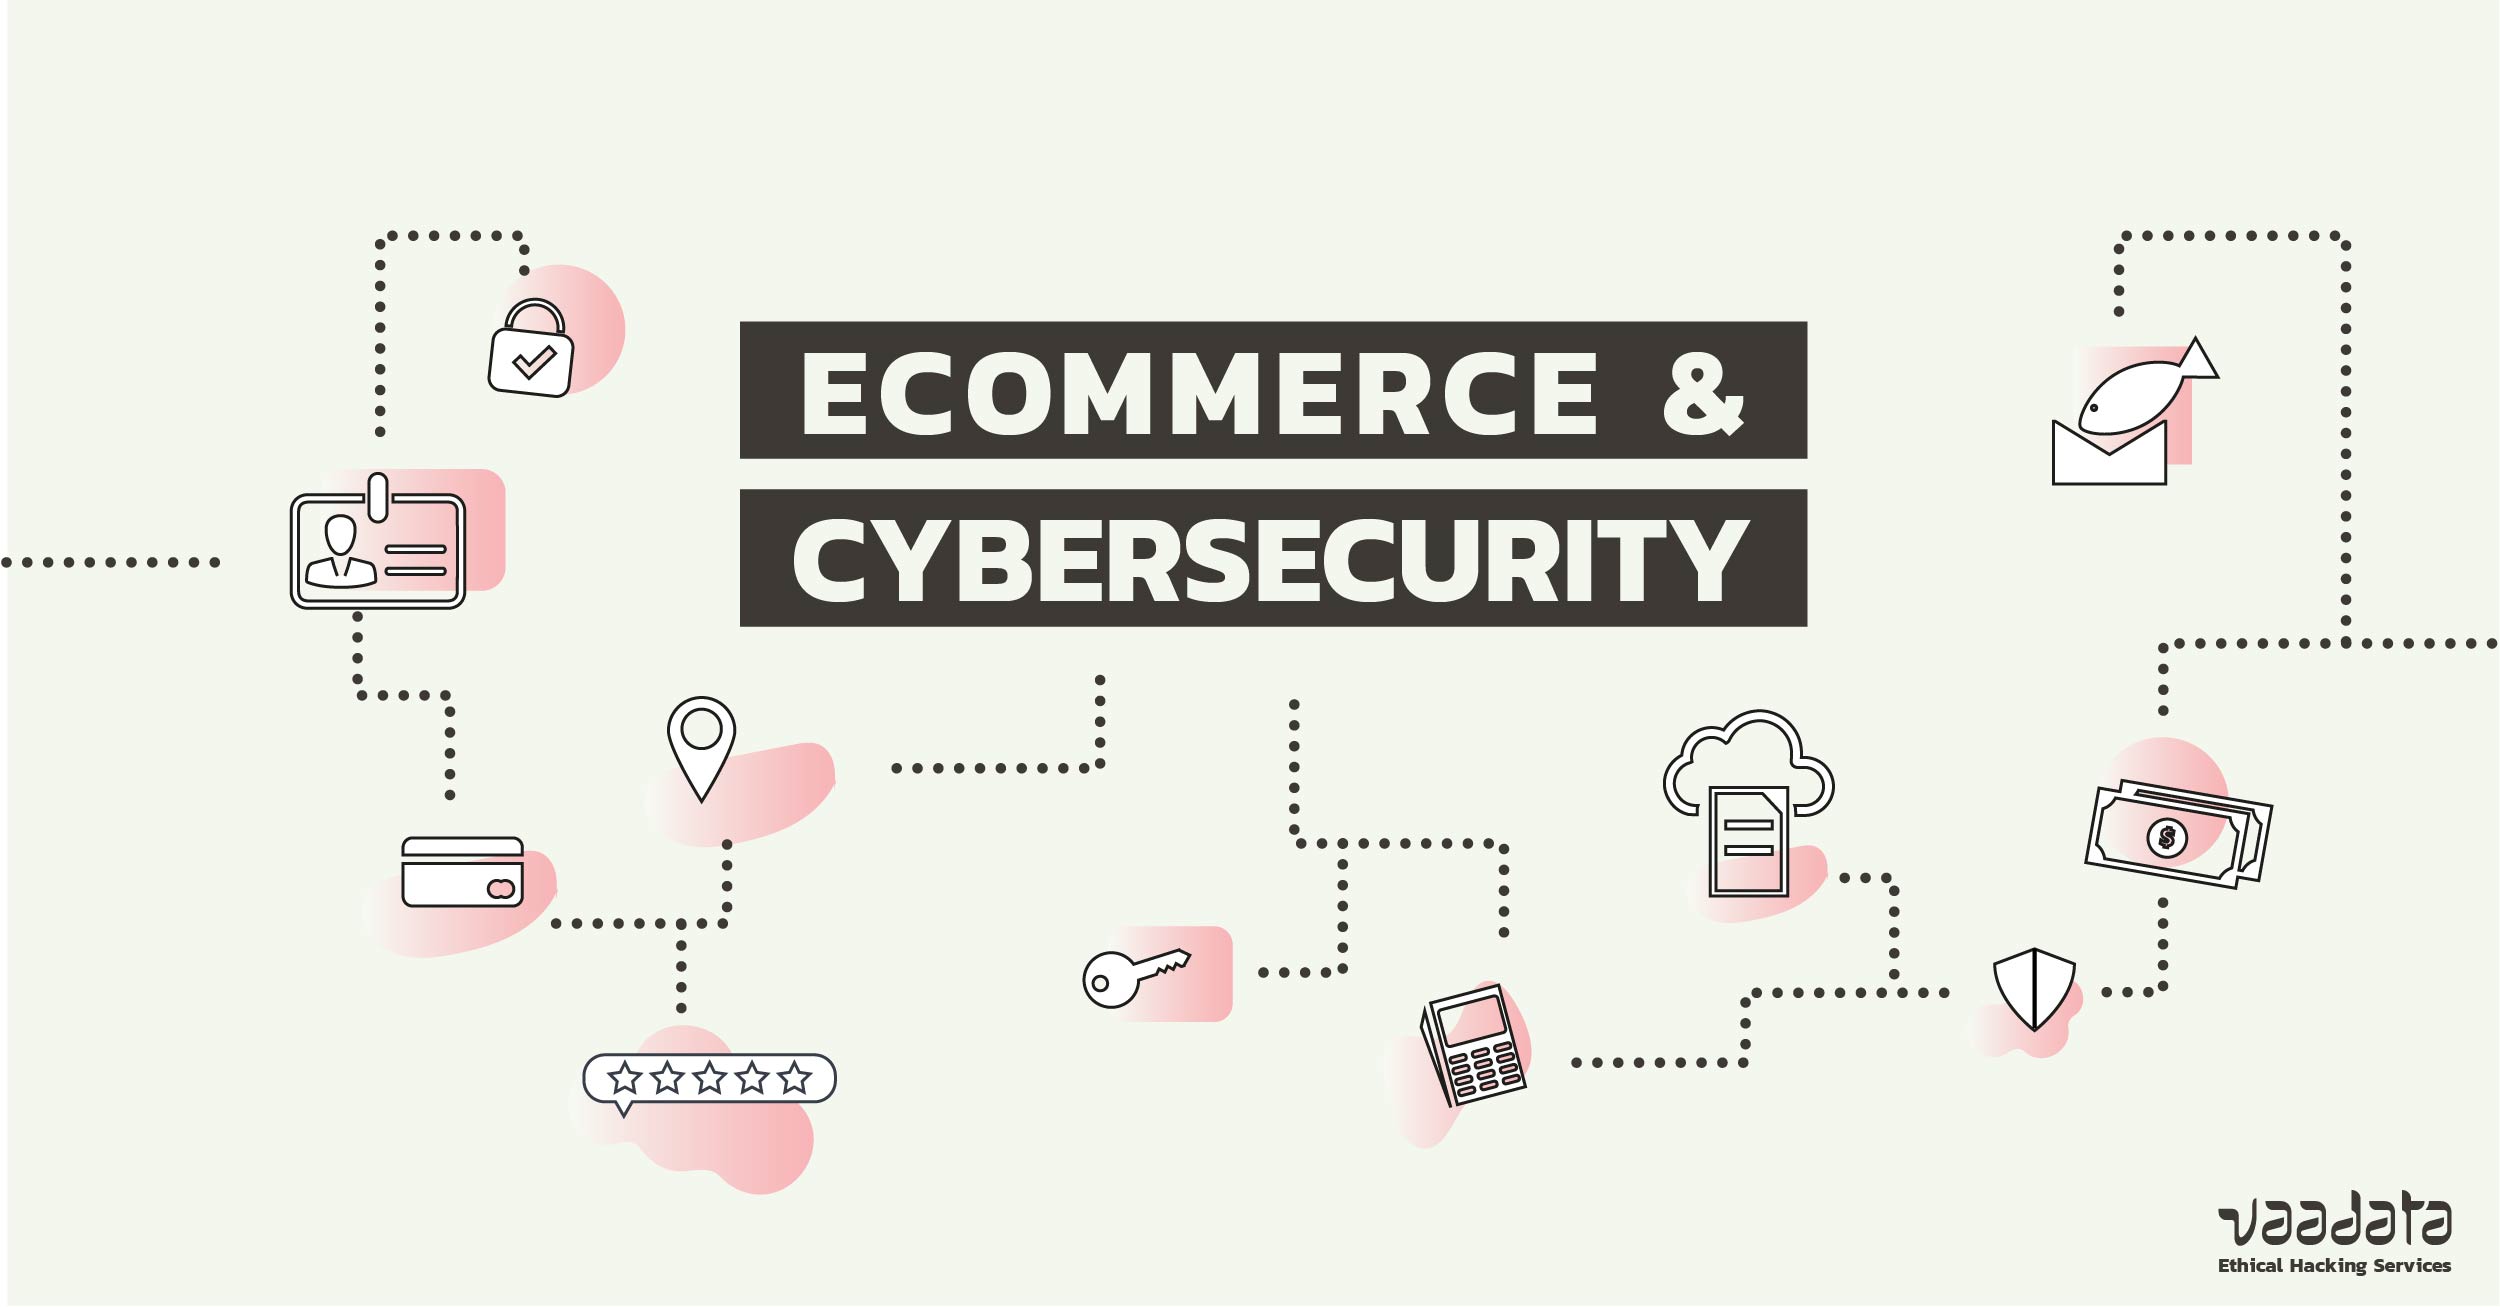 Attack Exploiting XSS Vulnerability in E-commerce Websites